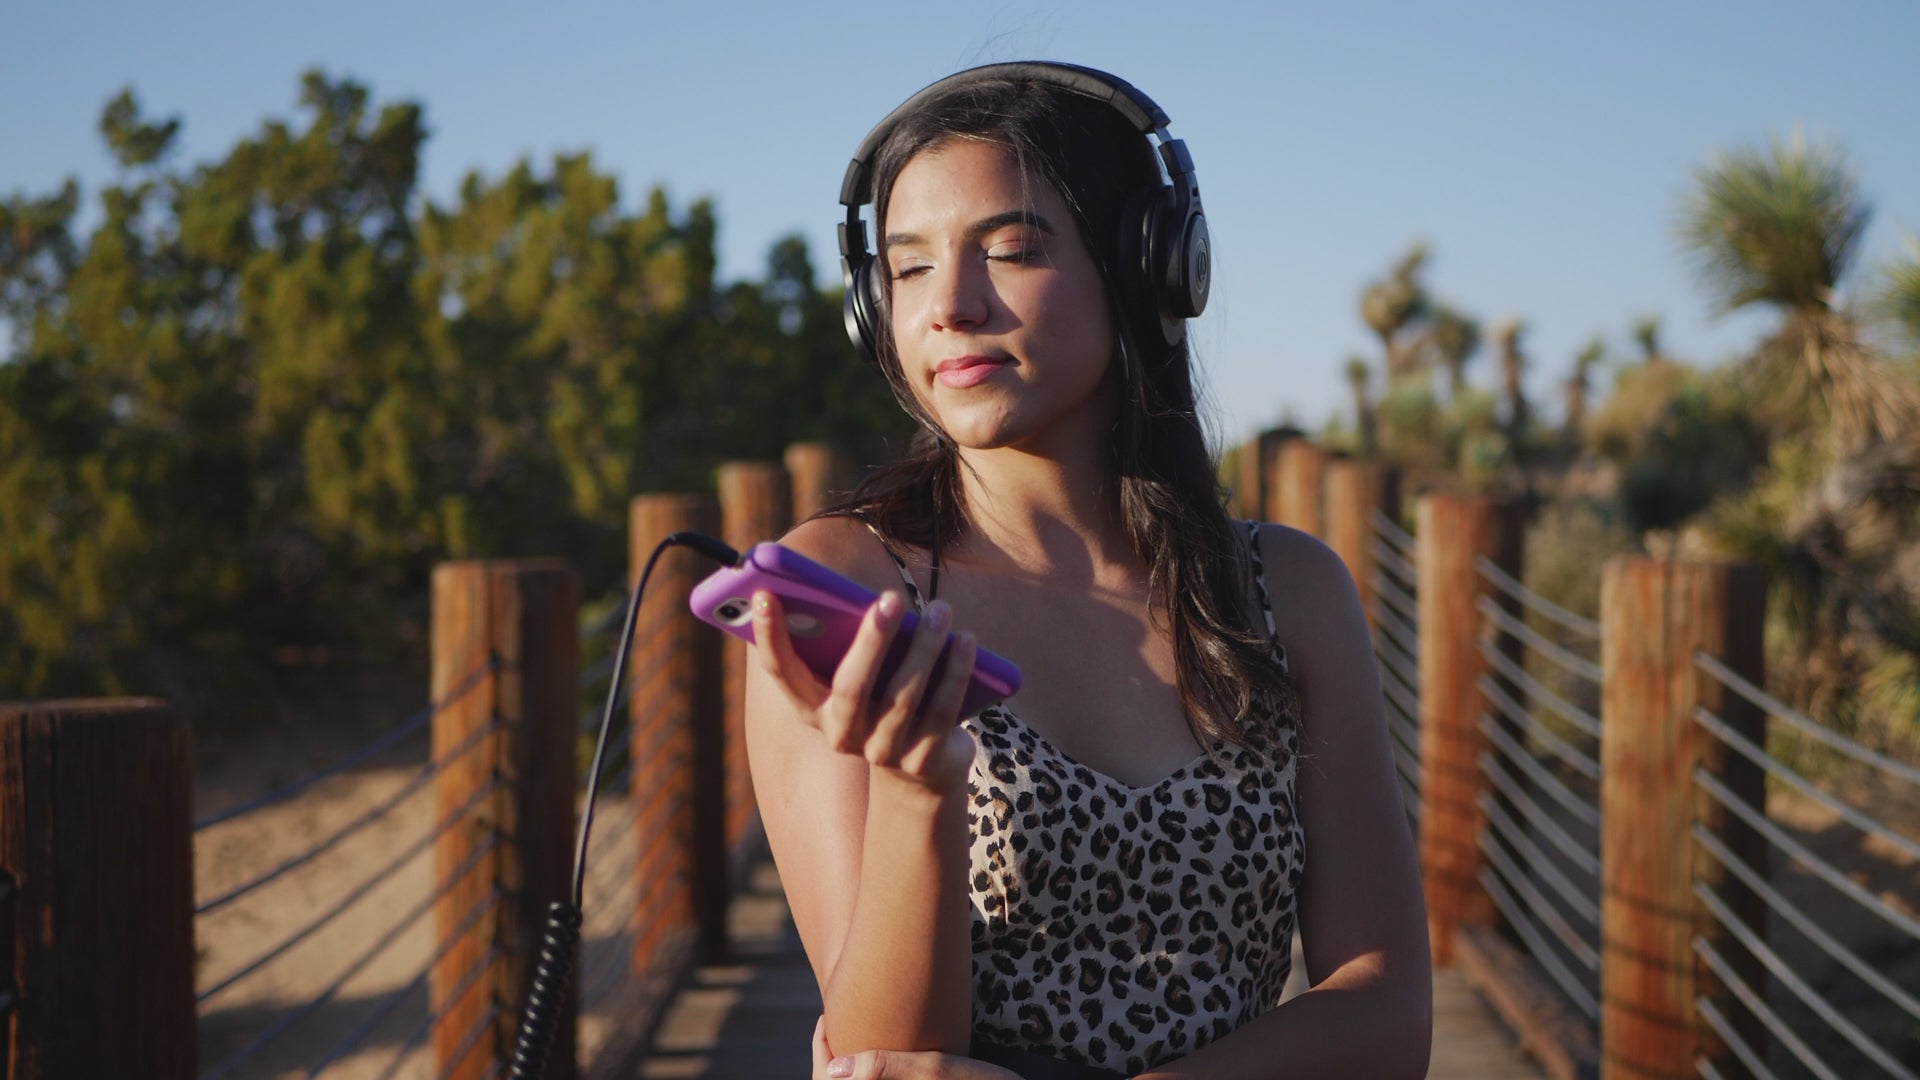 A girl using headphones